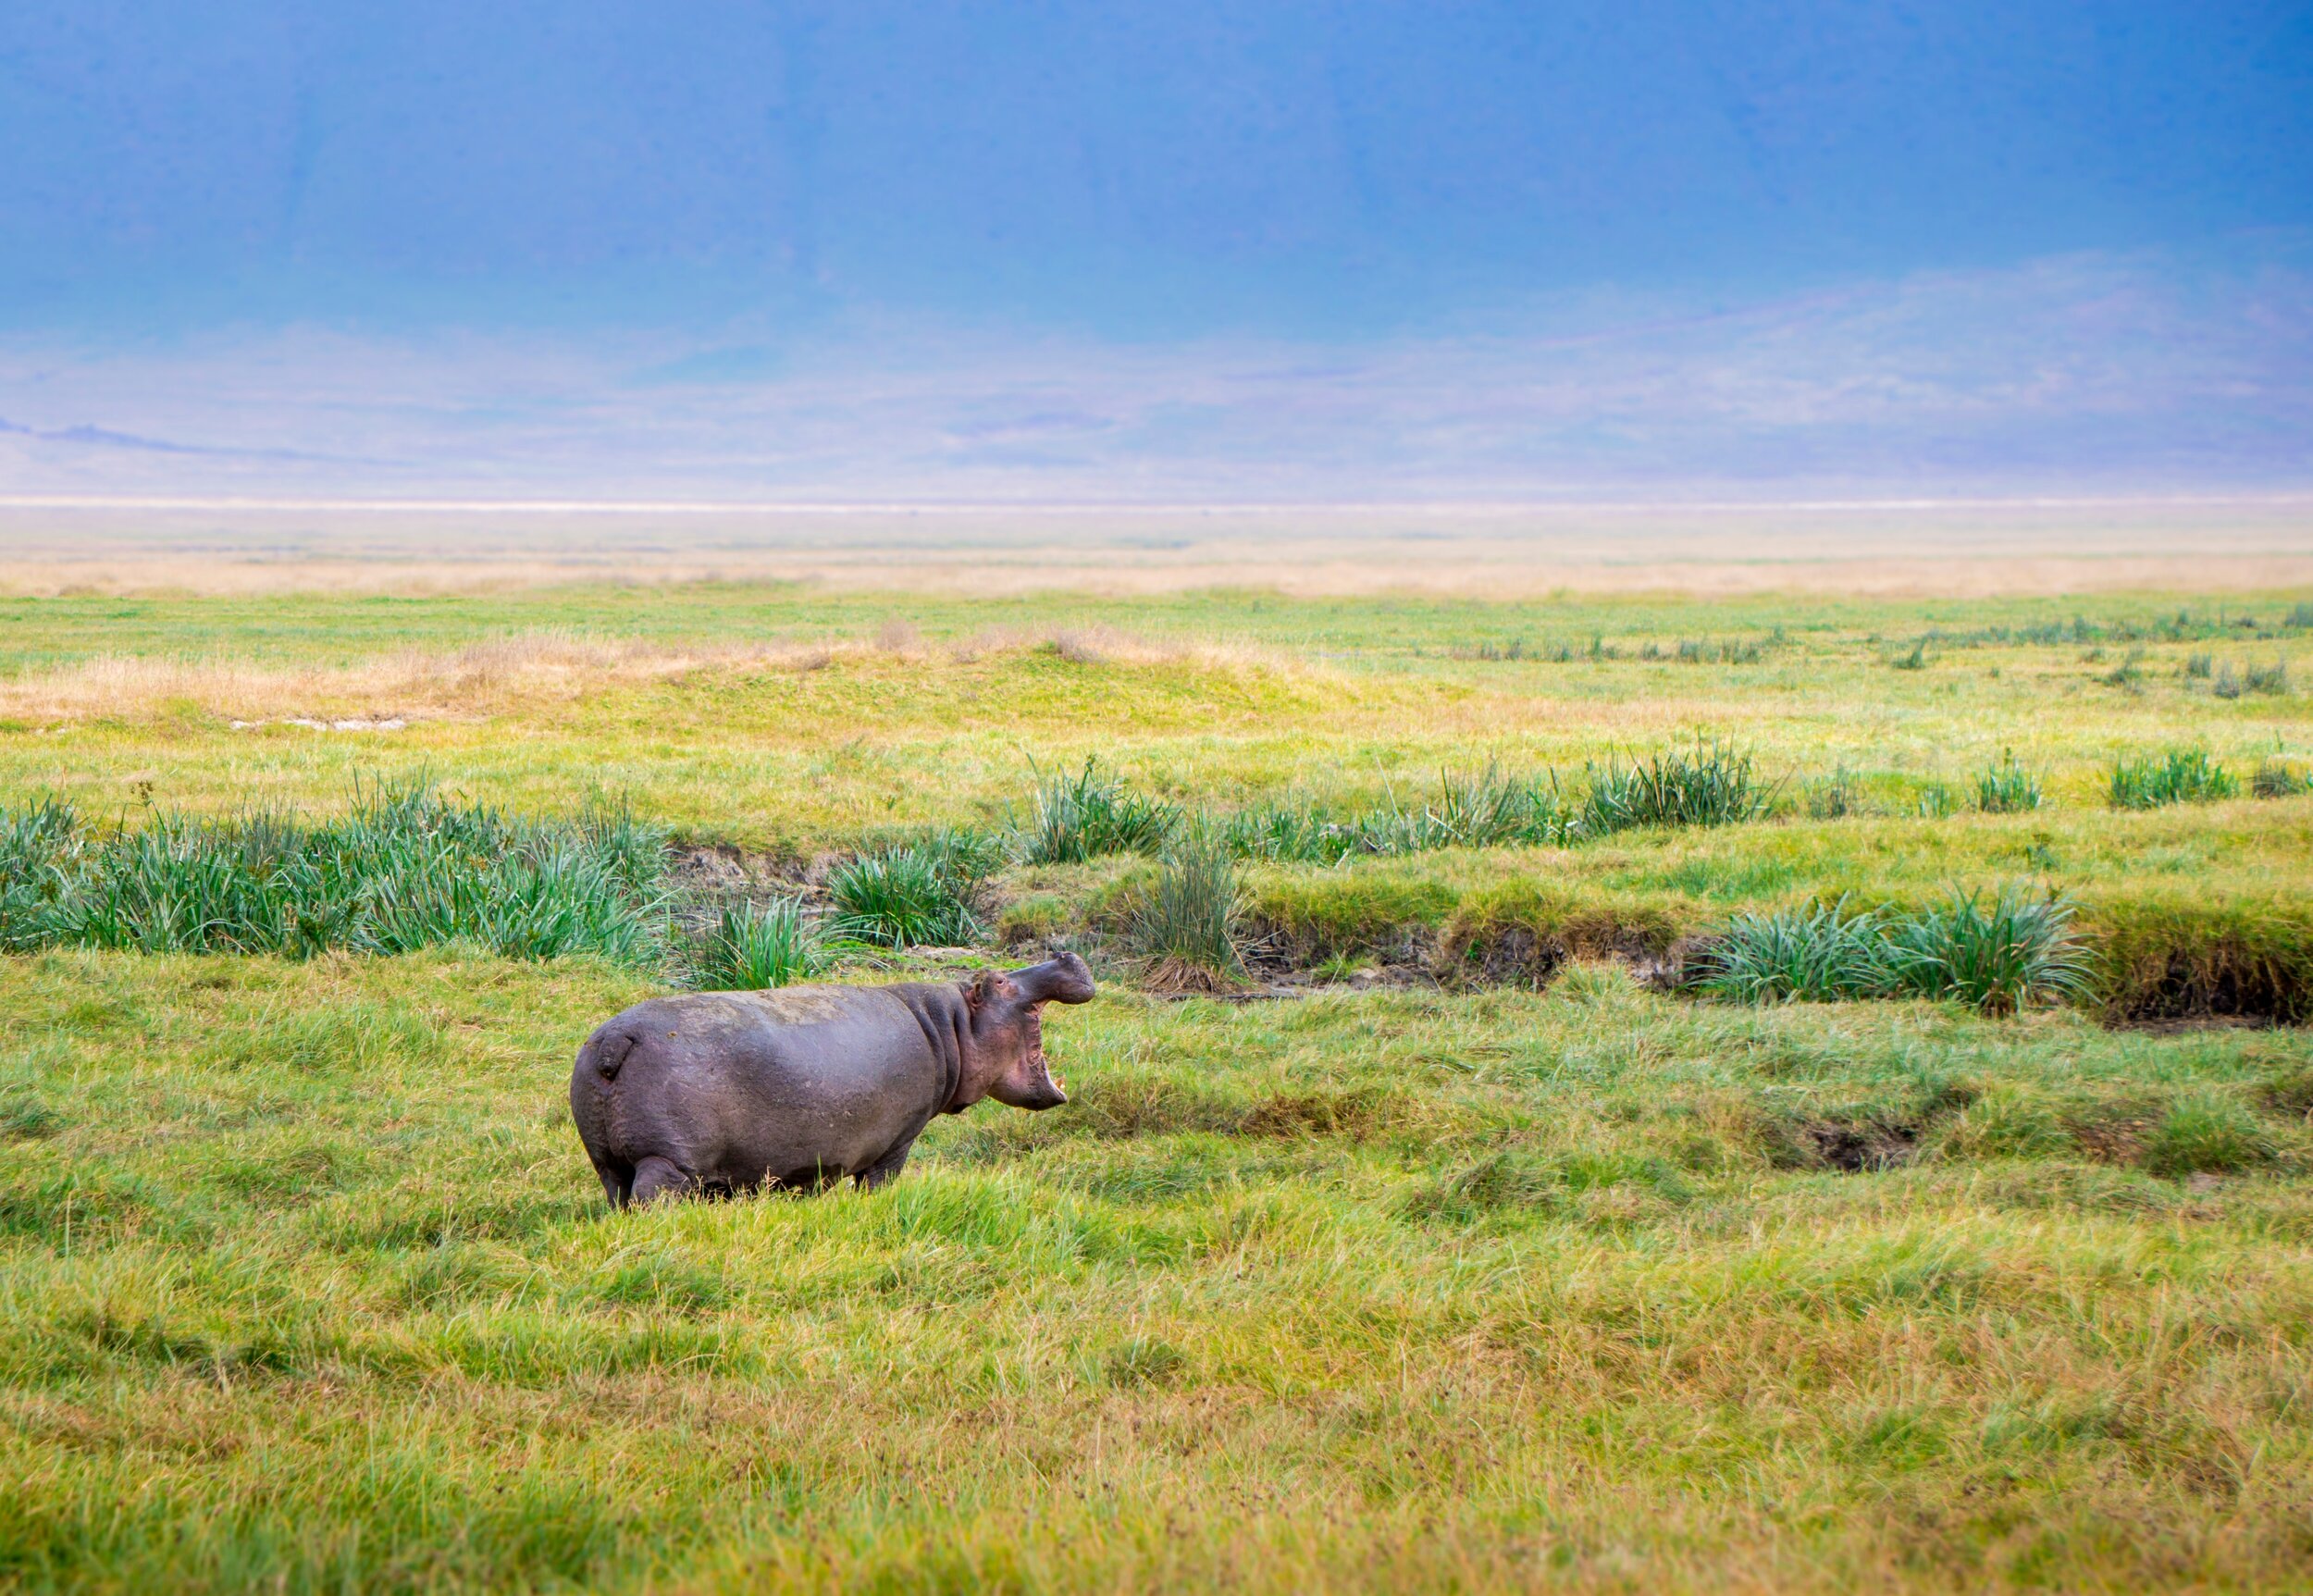 Hippo in Serengeti National Park